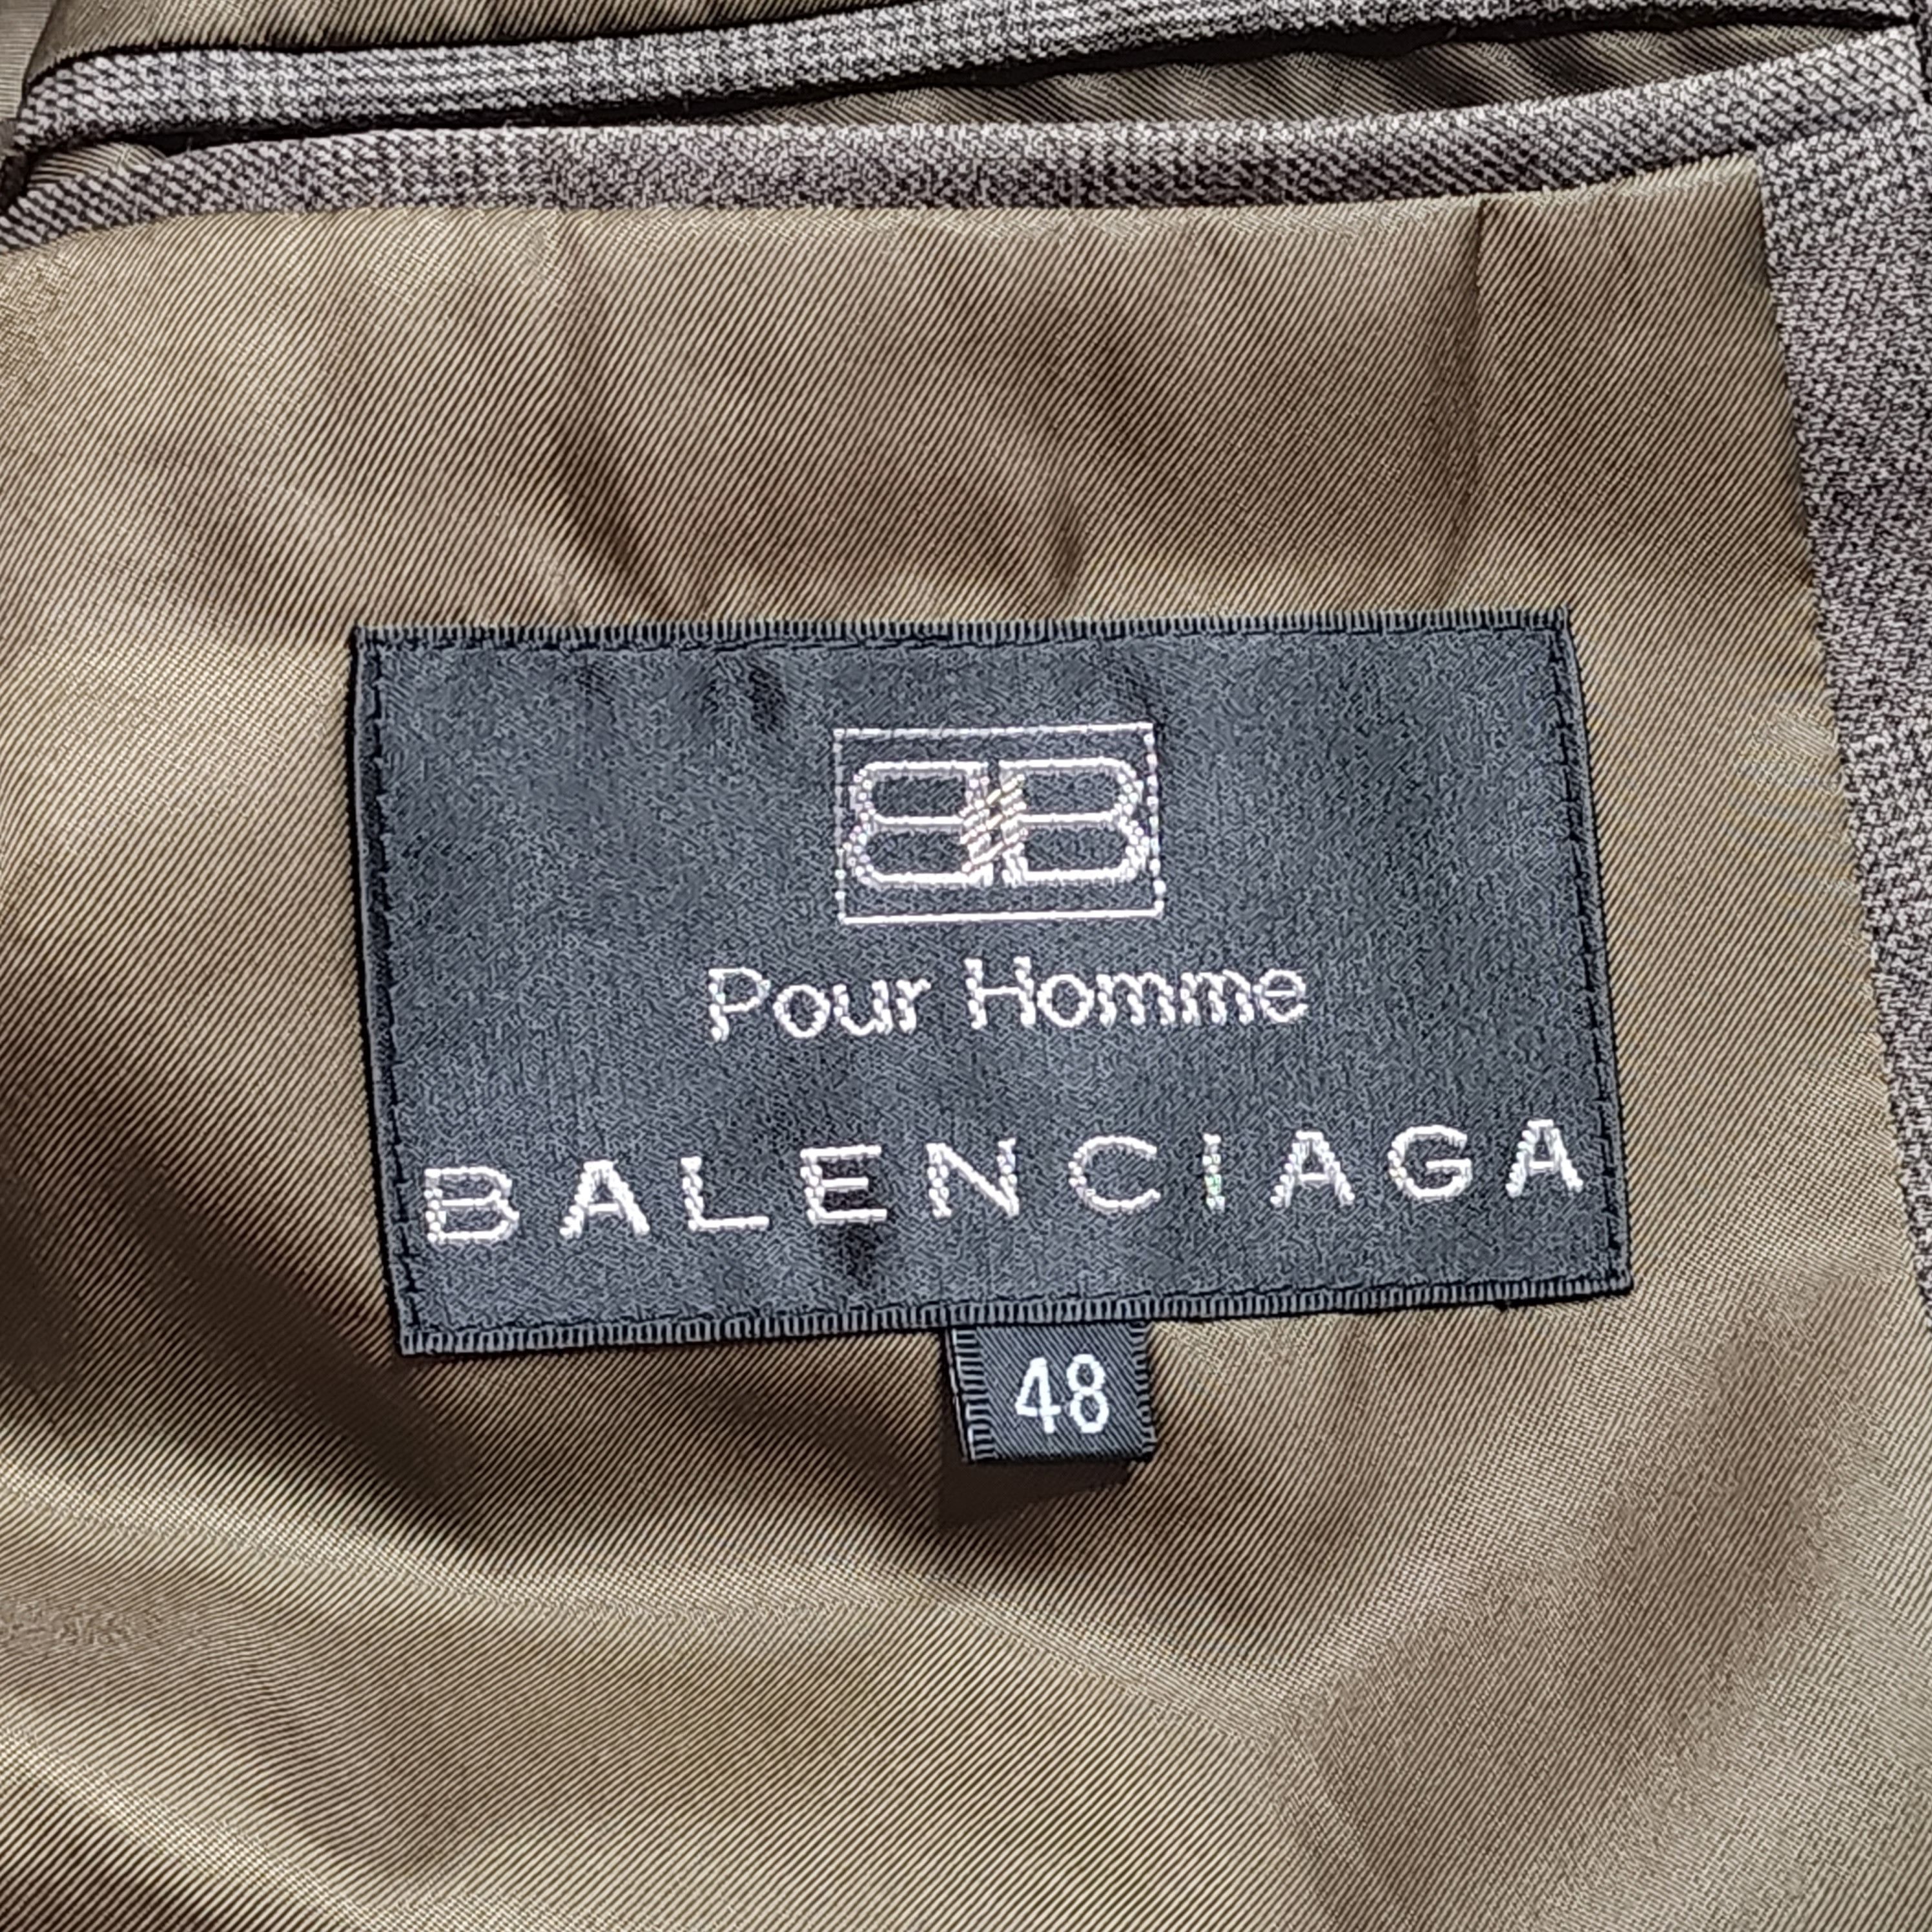 Balenciaga Pour Homme - Prince of Wales Blazer Jacket - 6